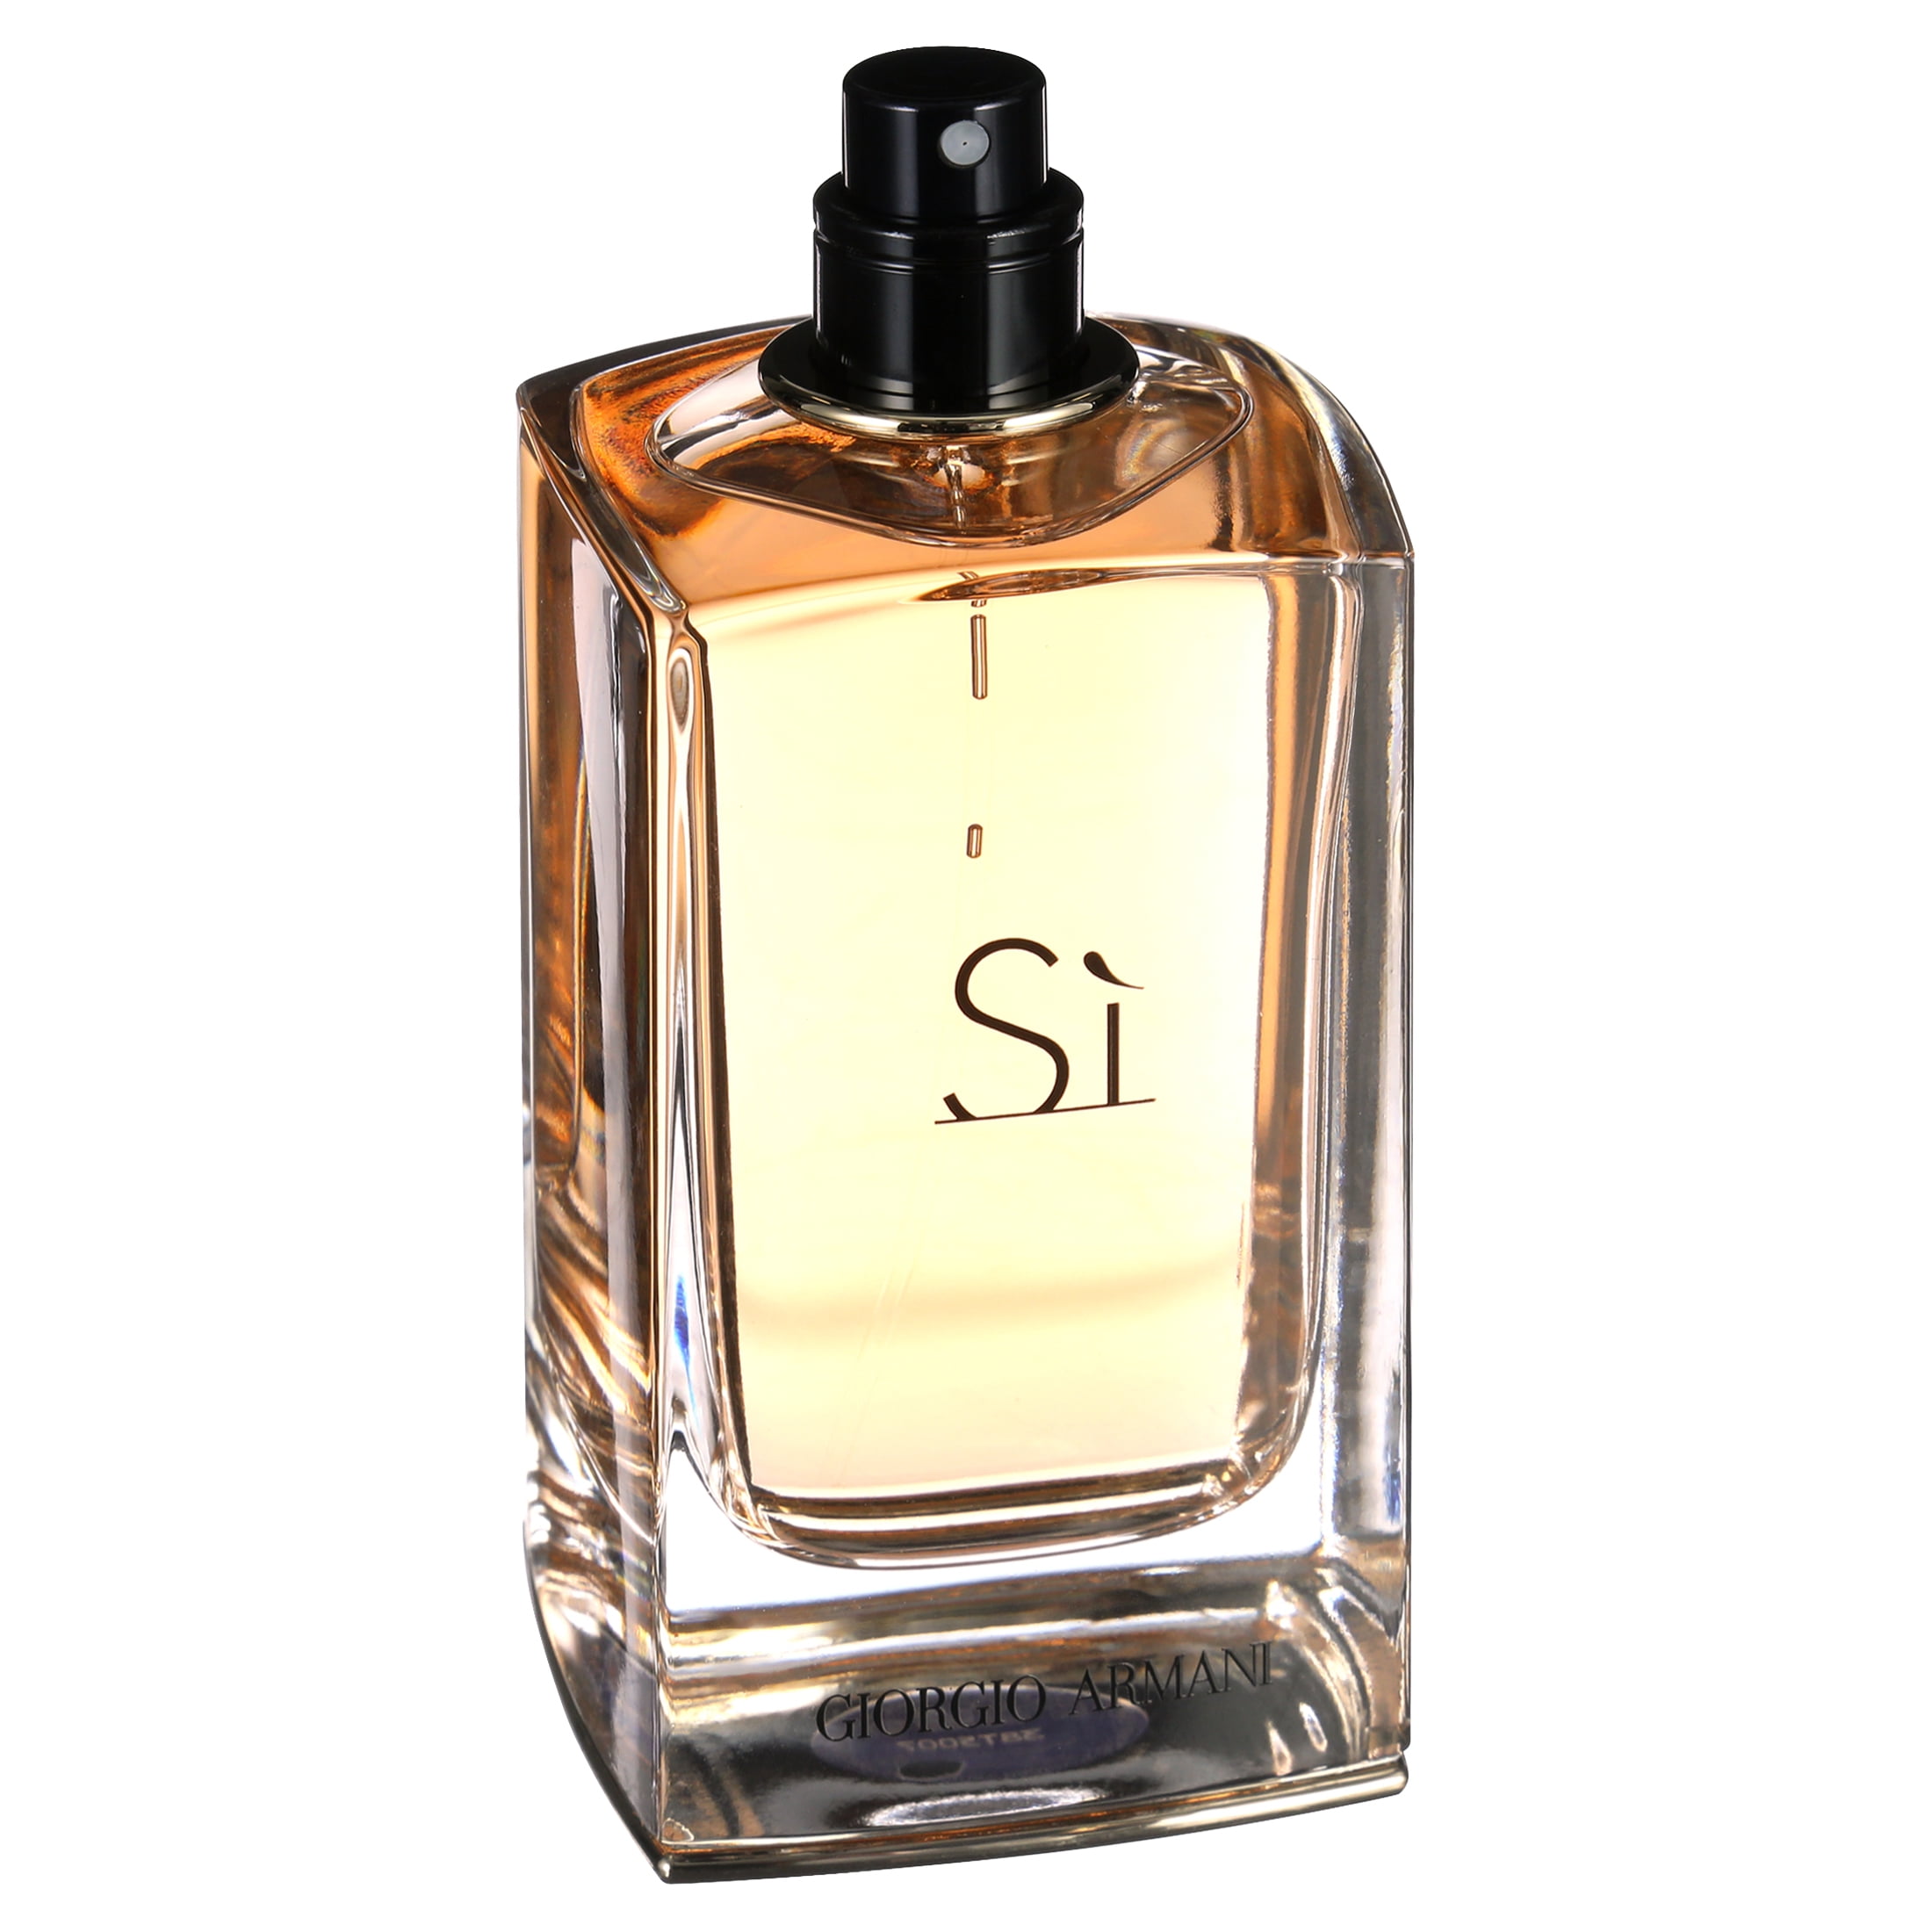 Giorgio Armani Si Eau de Parfum, Perfume for Women, 3.3 oz 